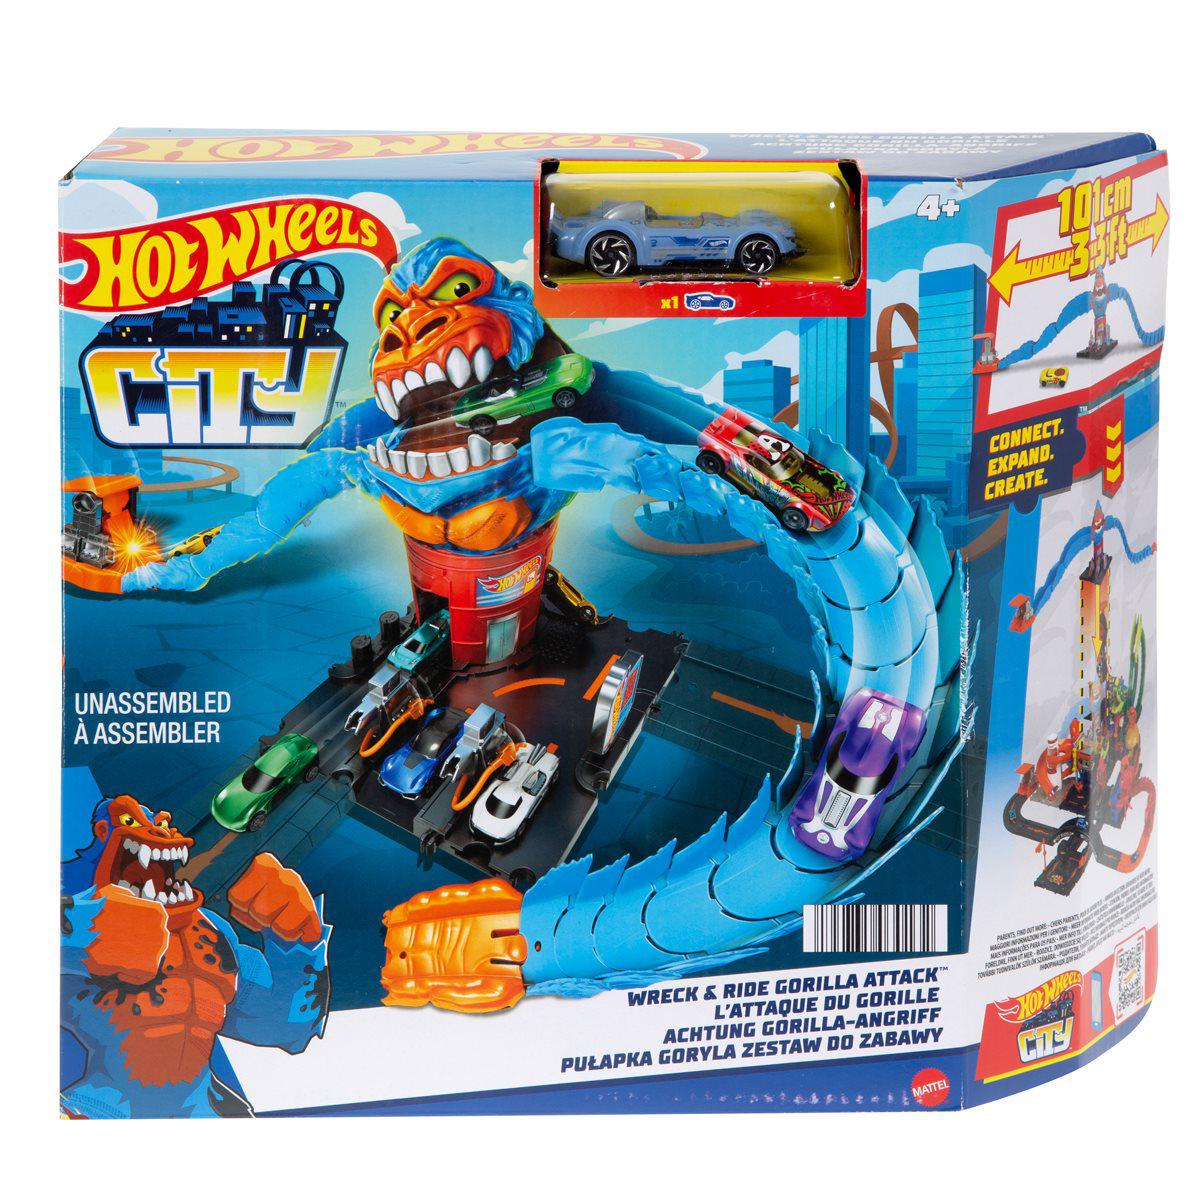 Mattel-Hot Wheels City Nemesis -HDR30-Wreck & Ride Gorilla Attack-Legacy Toys